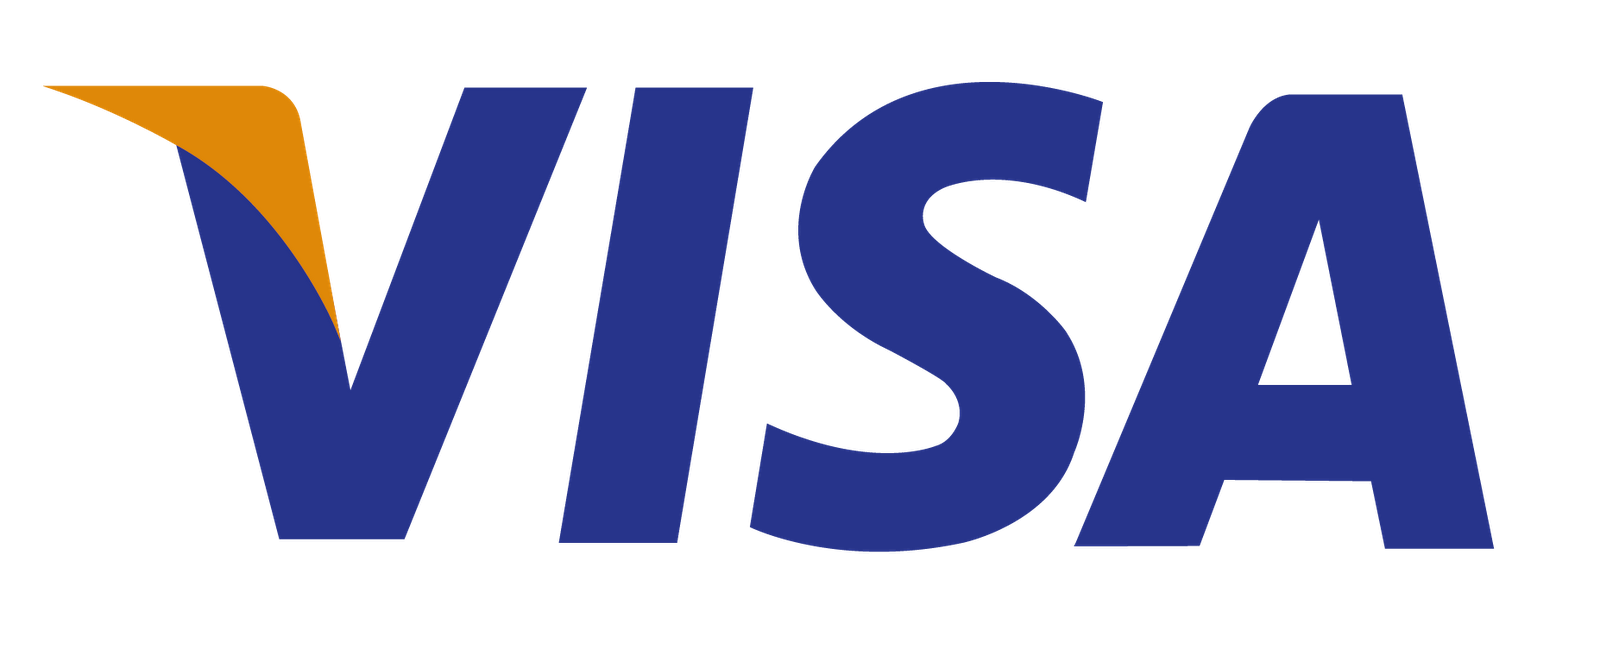 Visa Logo Png Free Transparent Png Logos Images And Photos Finder